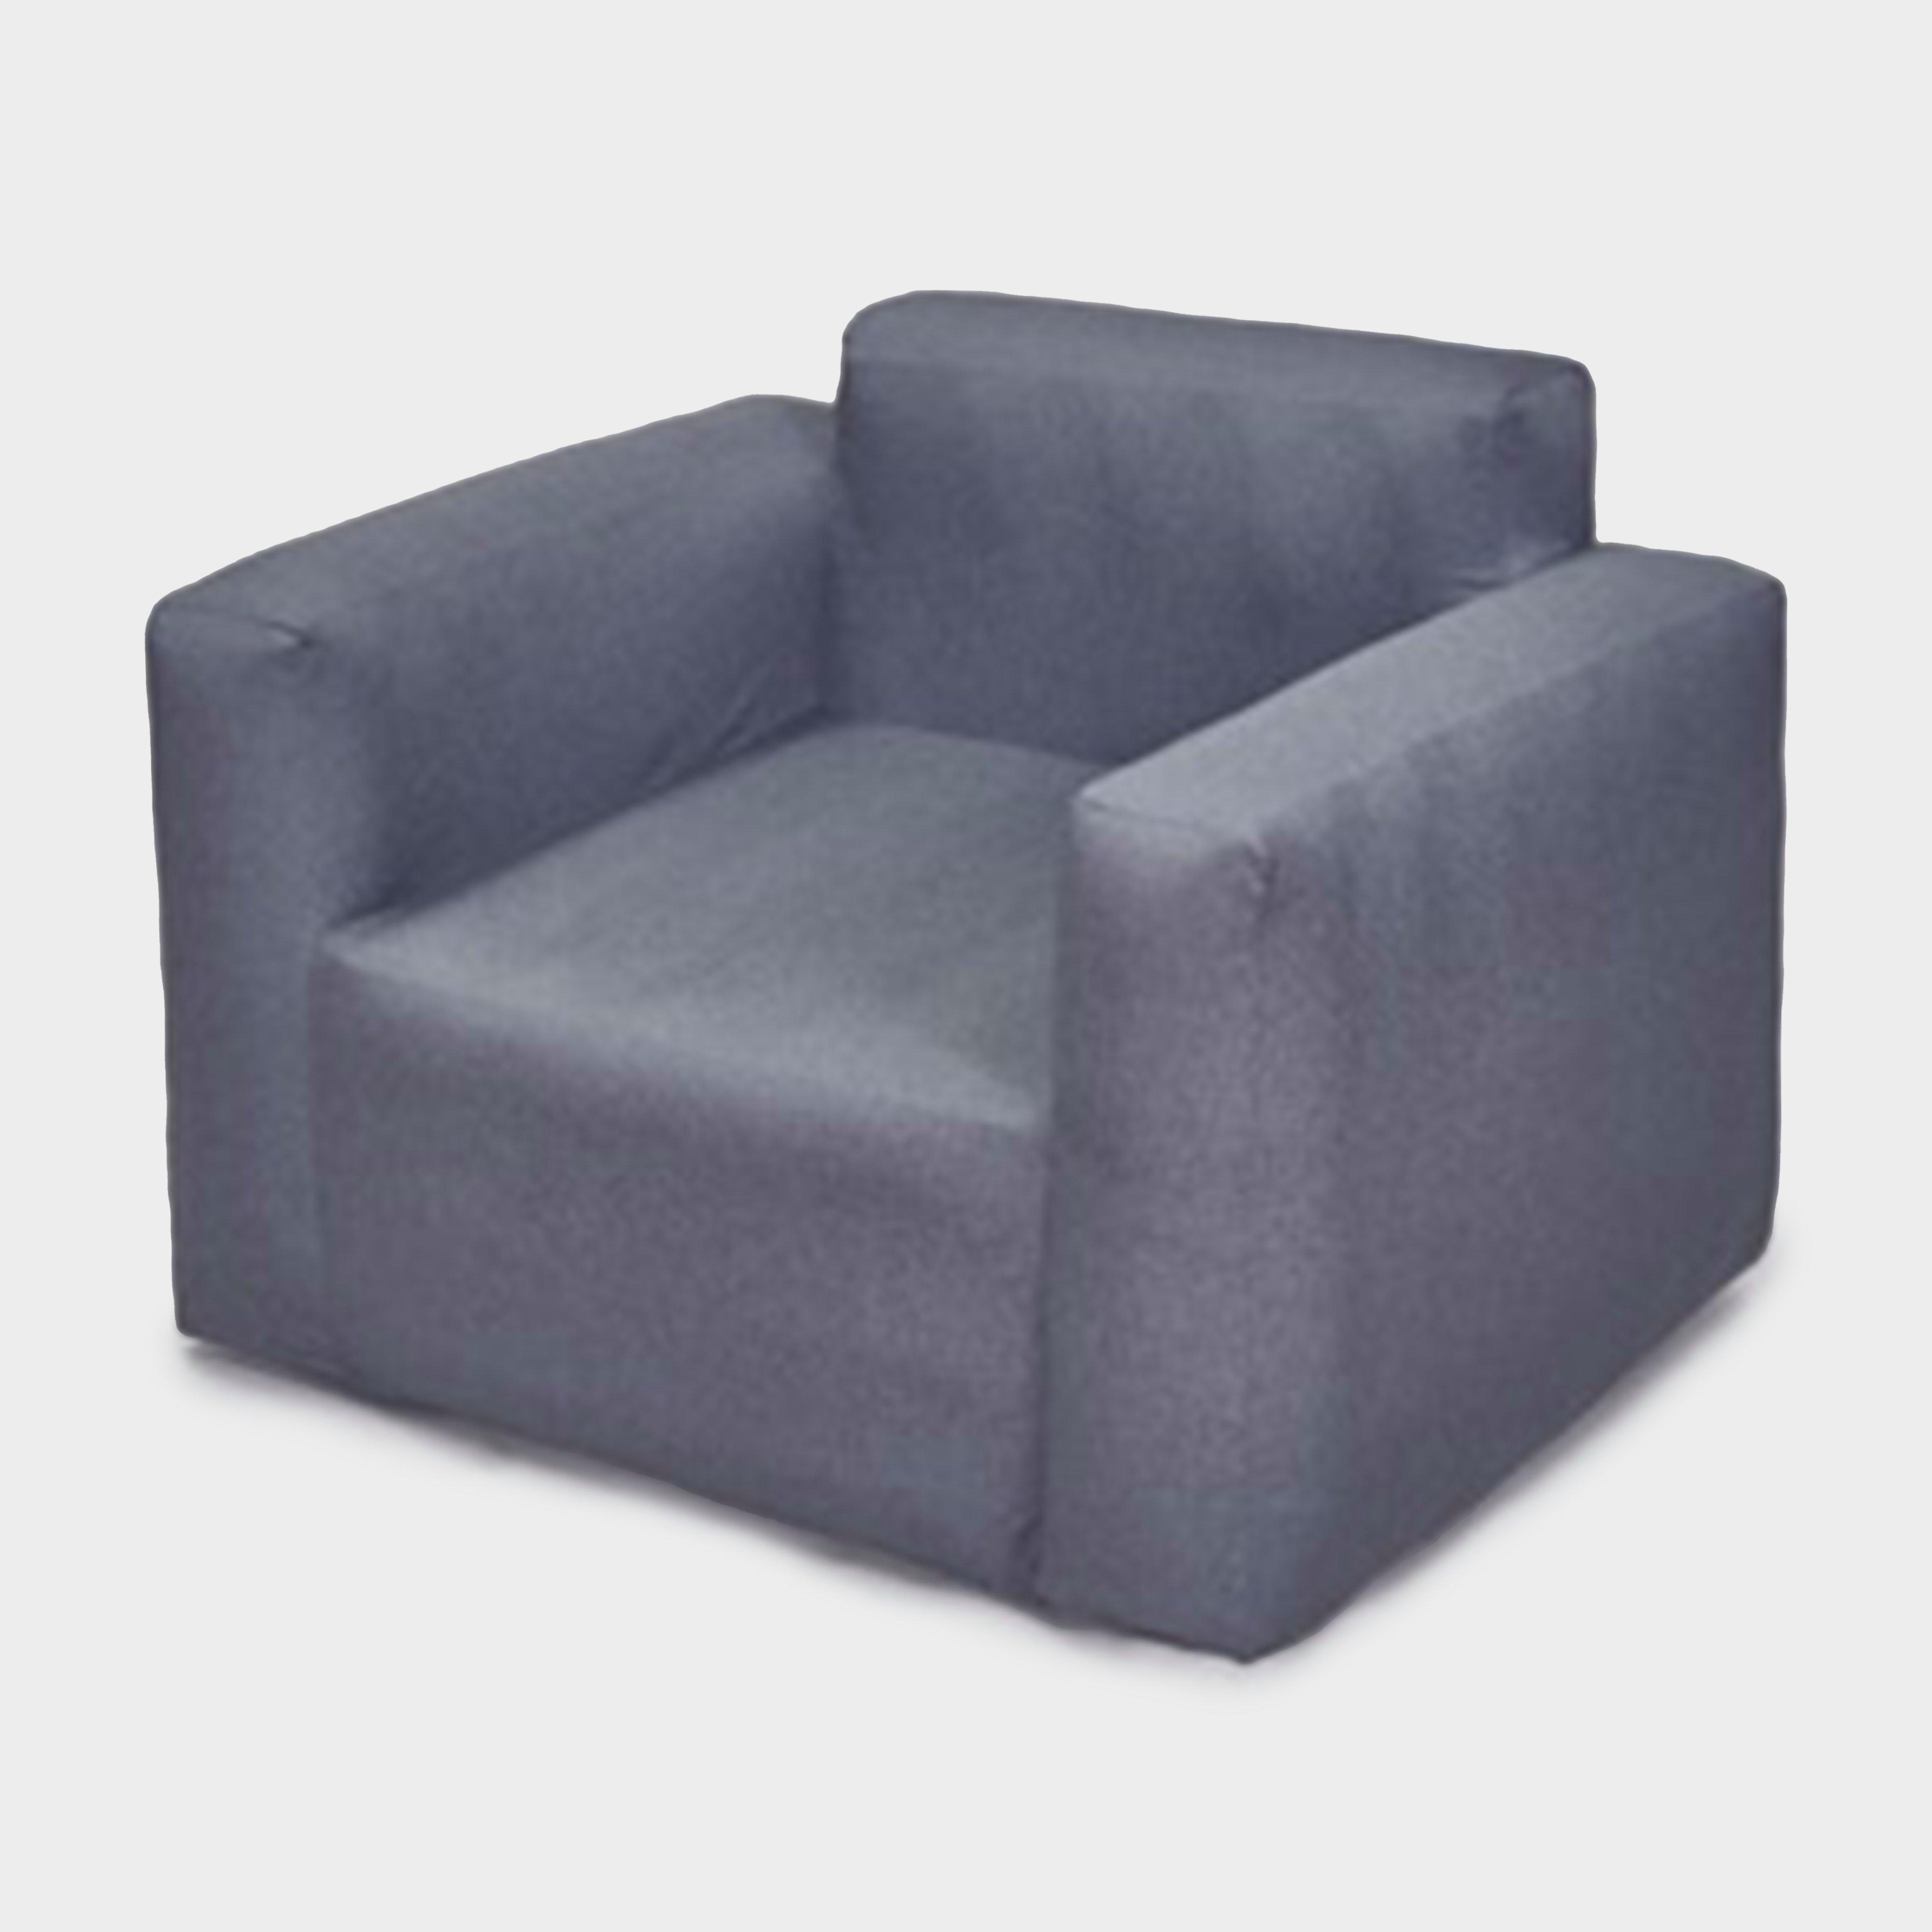  HI-GEAR Inflatable Chair, Grey